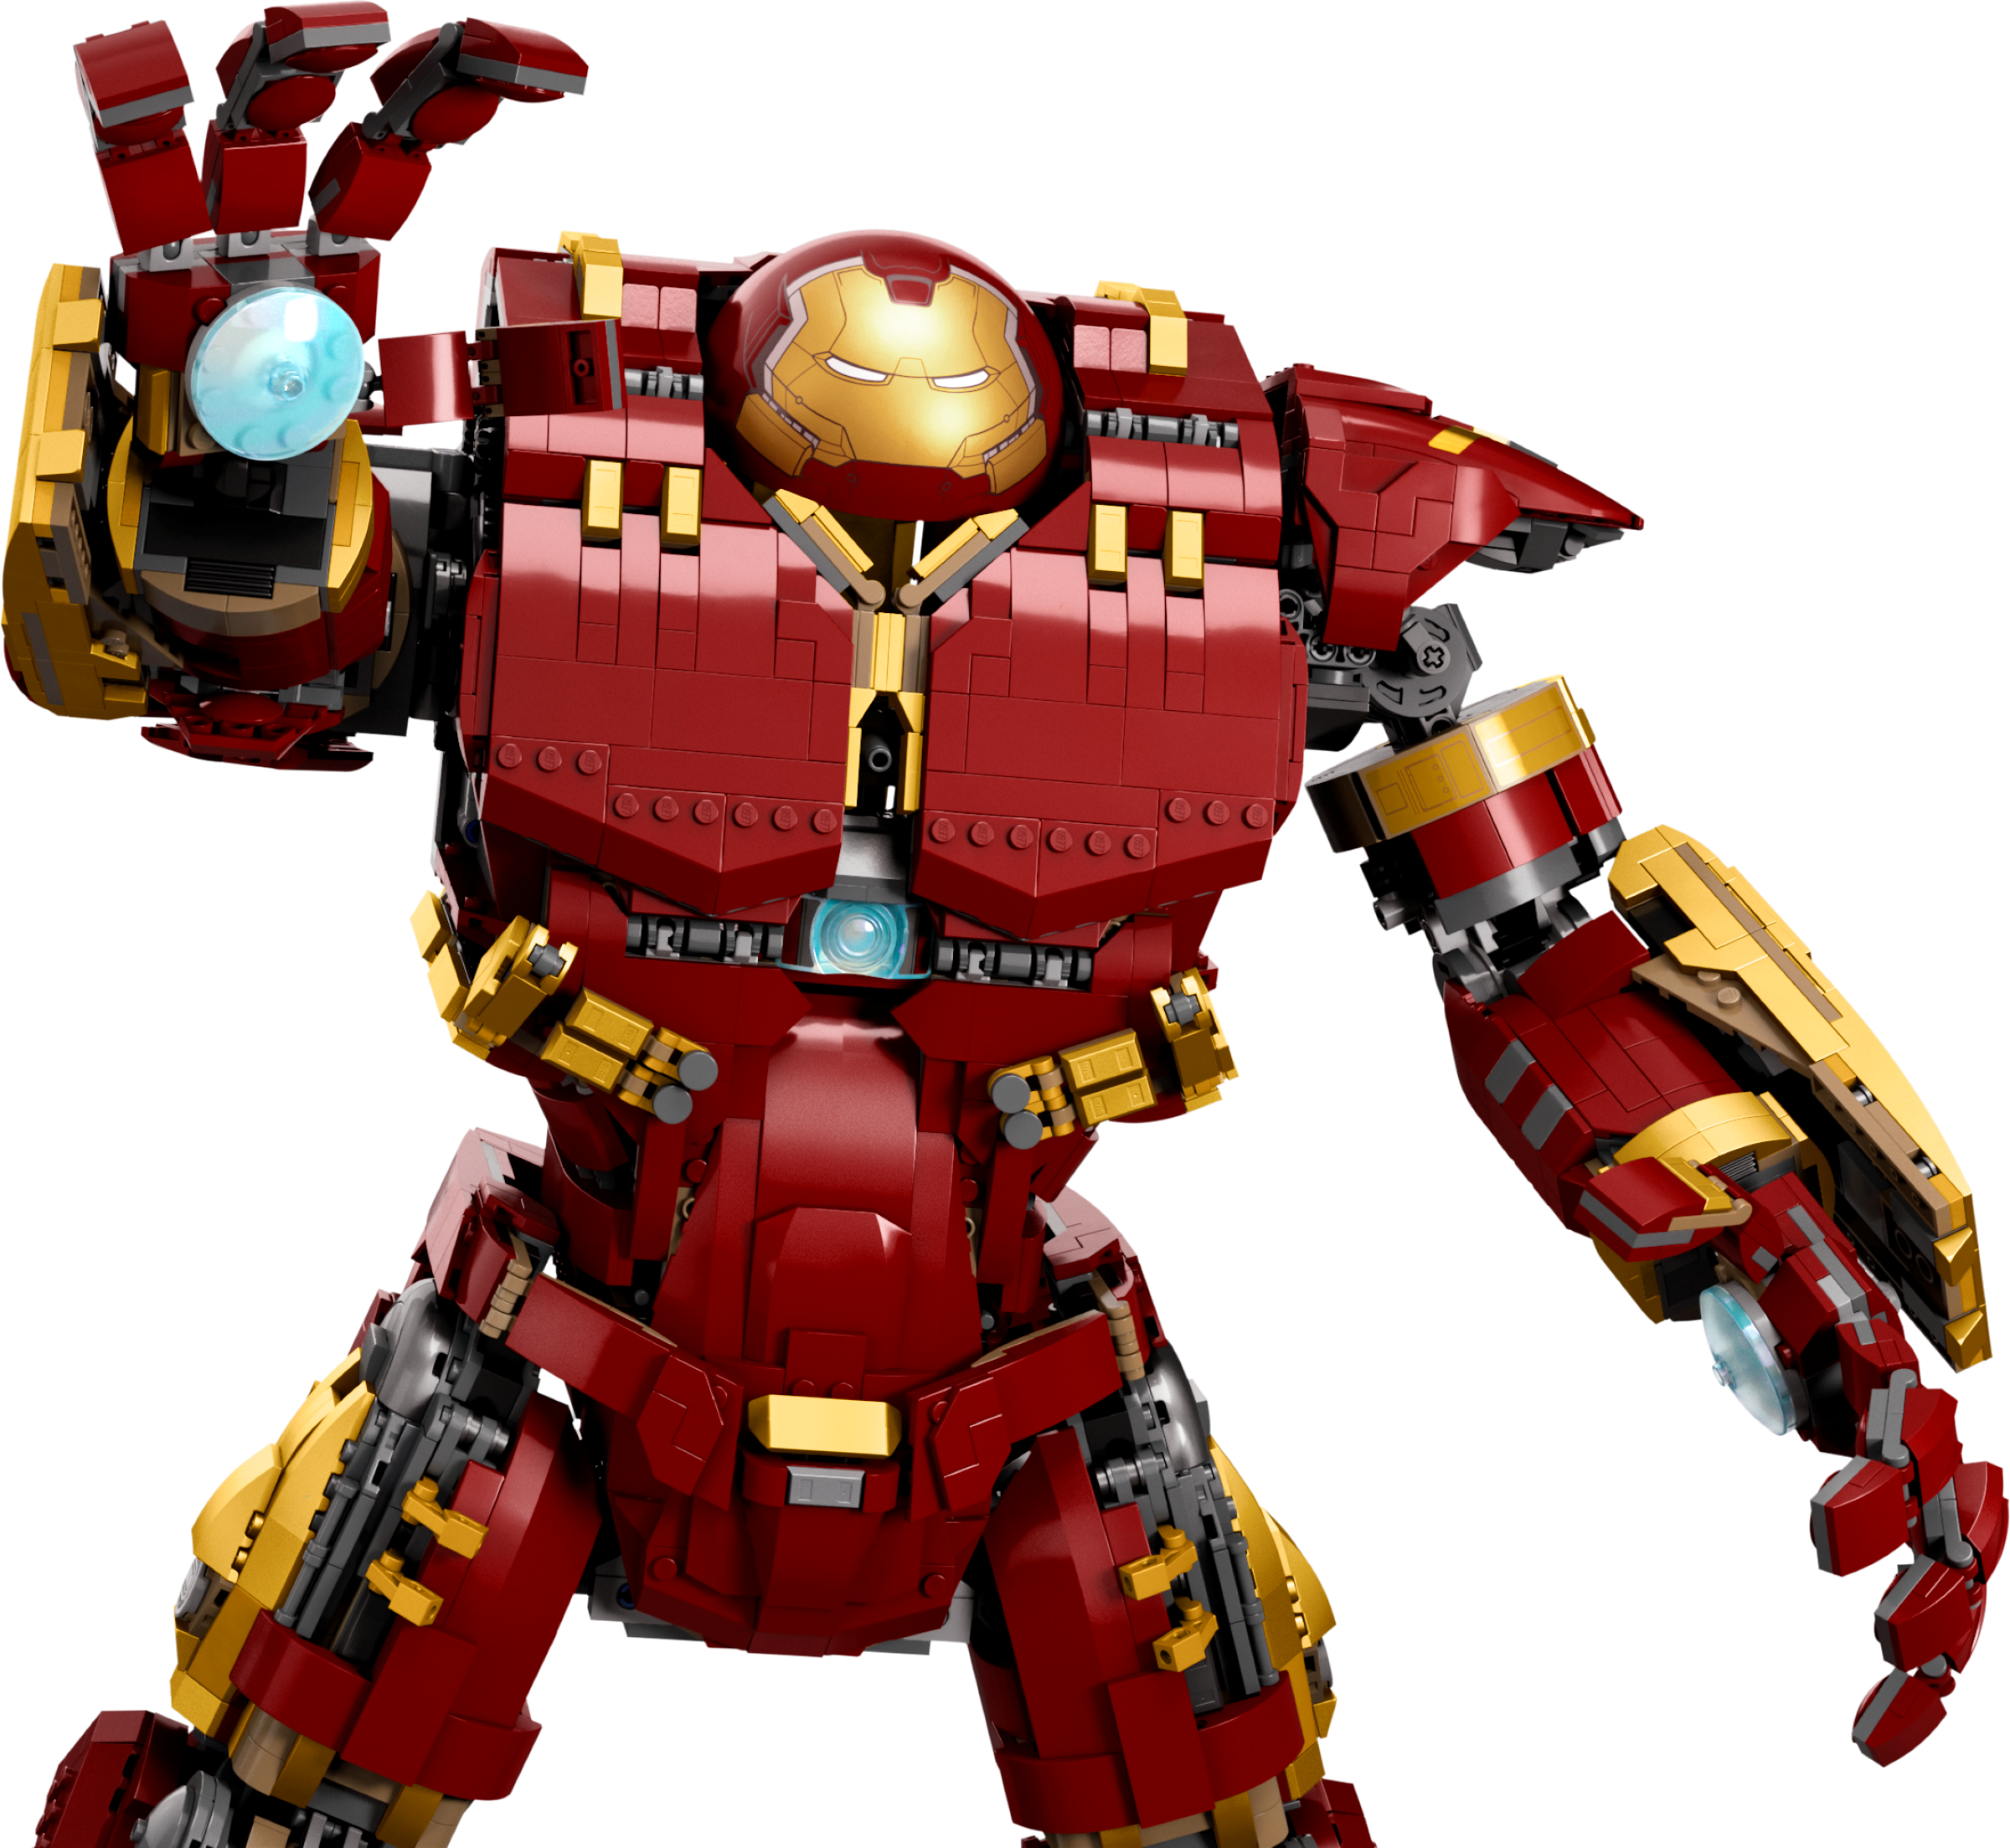 Lego marvel 76210 hulkbuster, grande mech mk44 del supereroe iron man da  avengers age of ultron con minifigure di tony stark - Toys Center